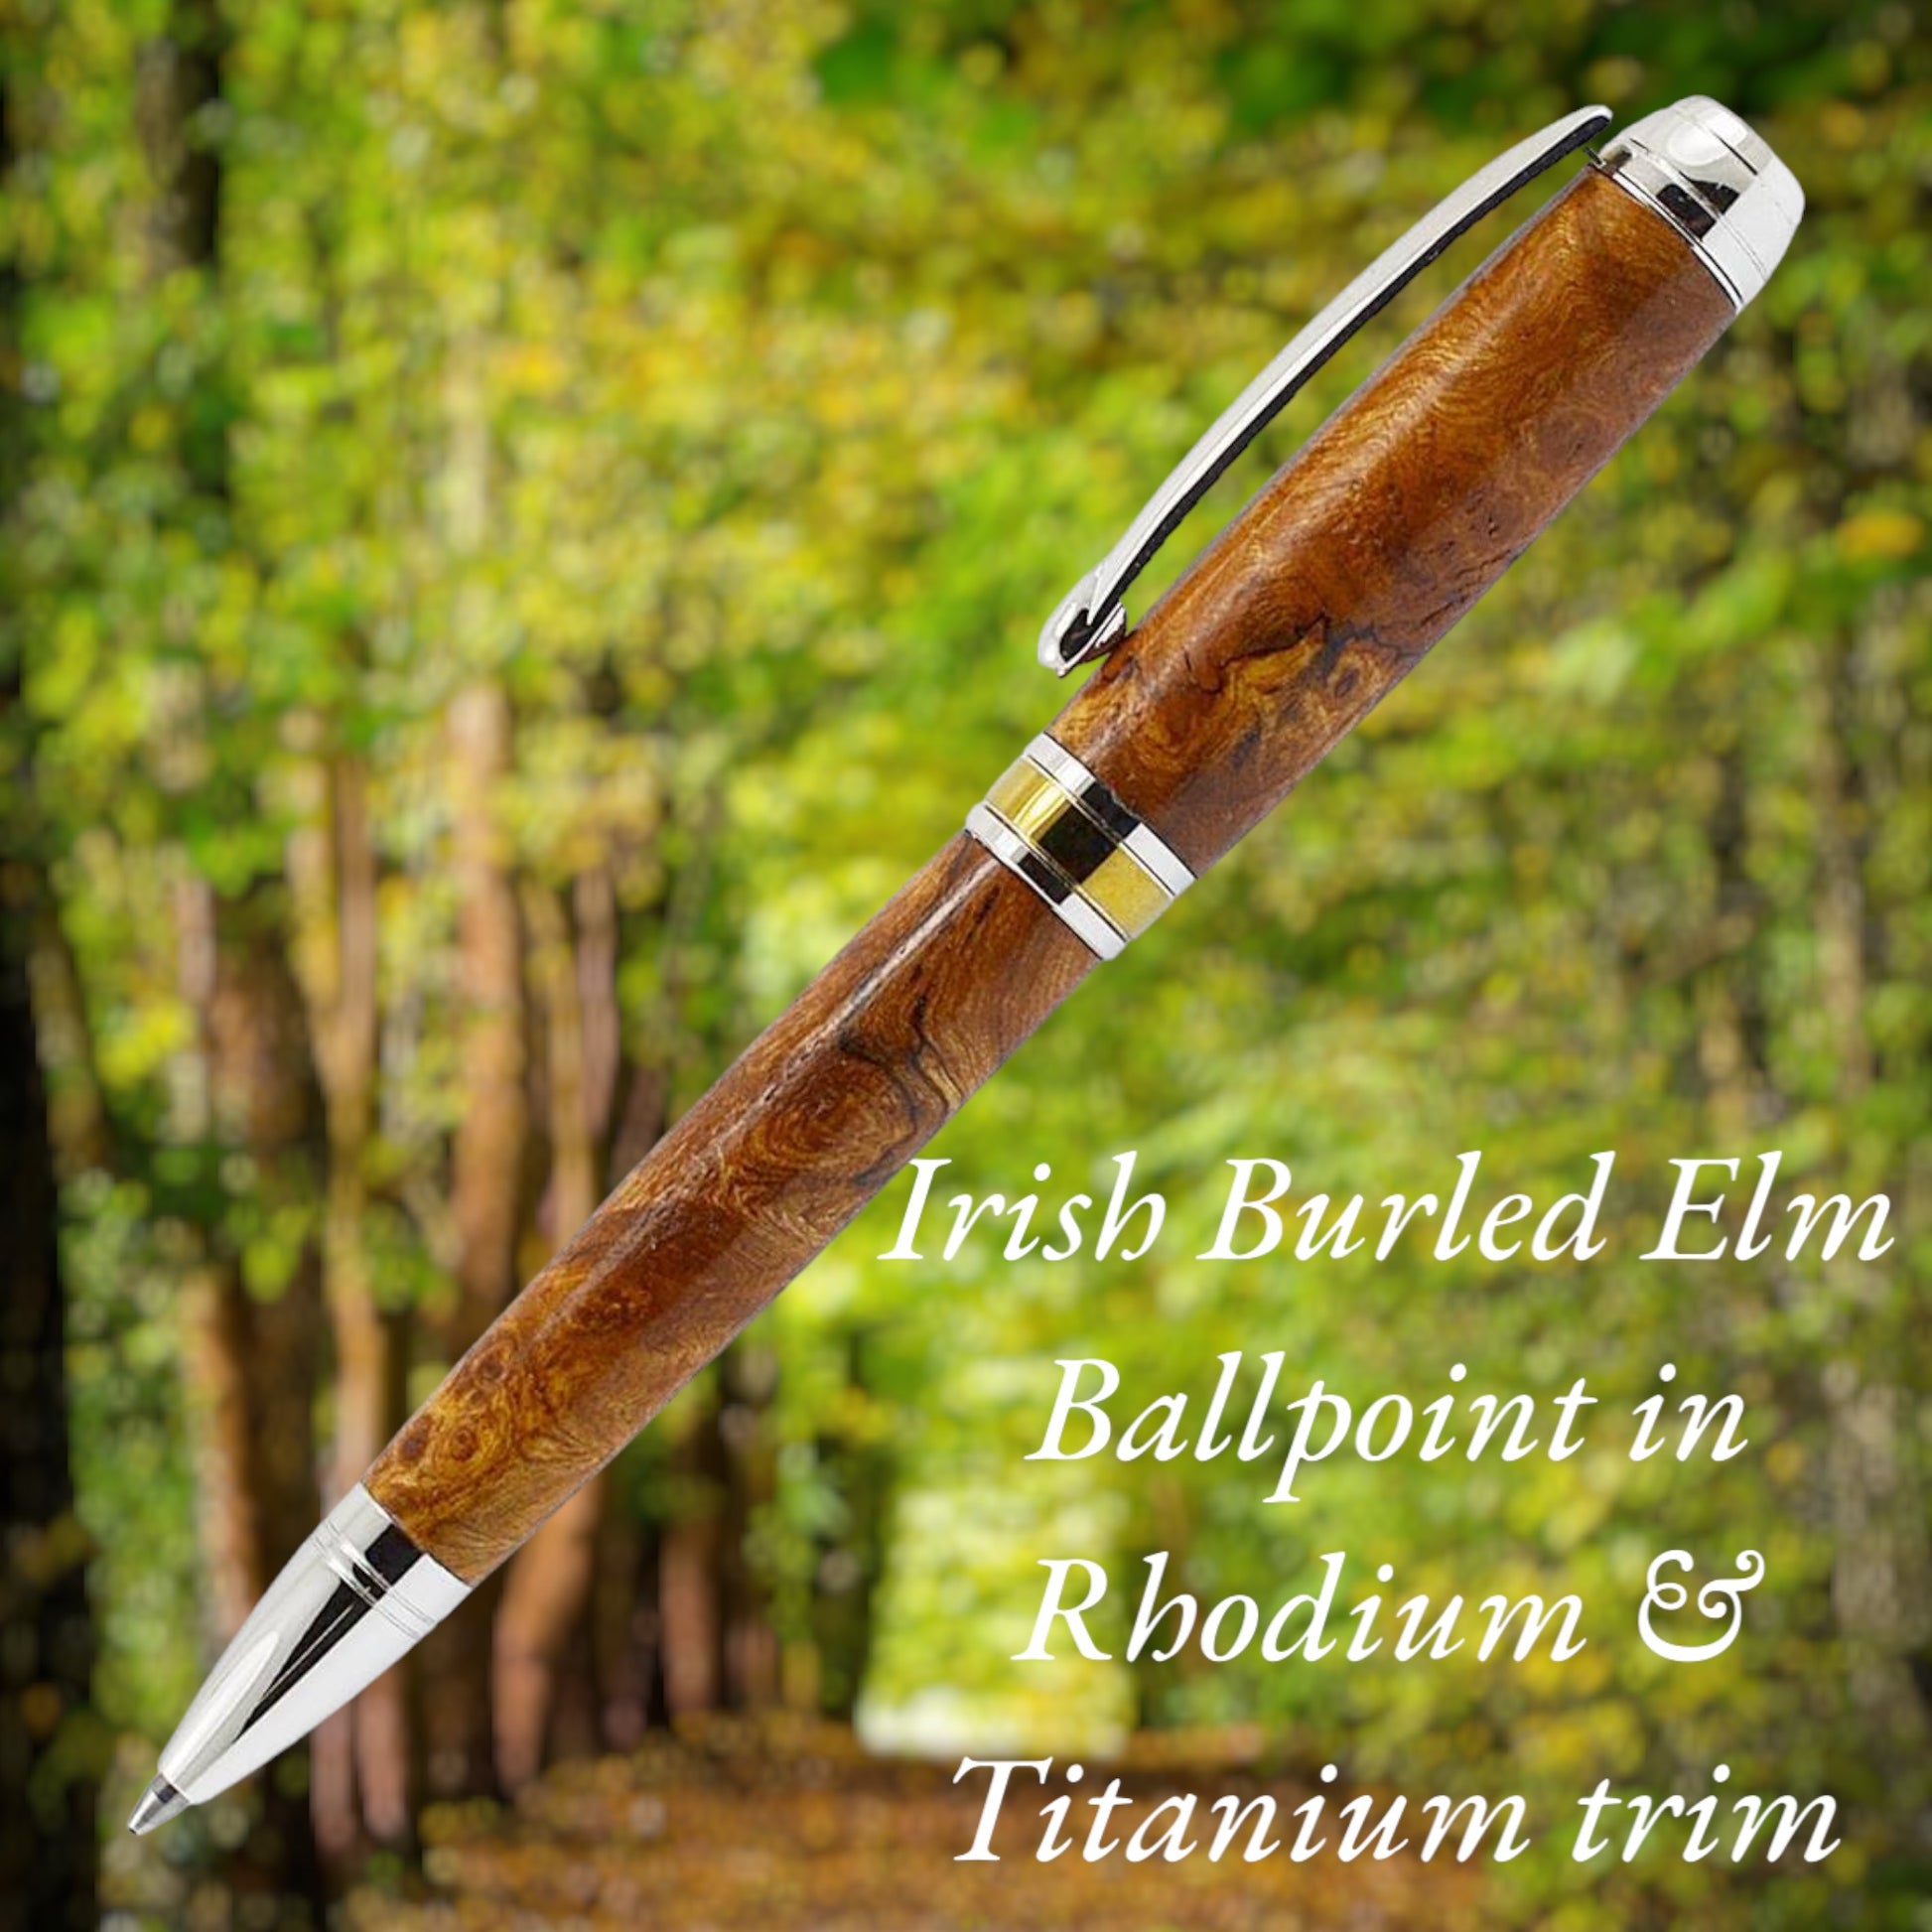 Ballpoint pen with Parker pen type refill by Irish Pens